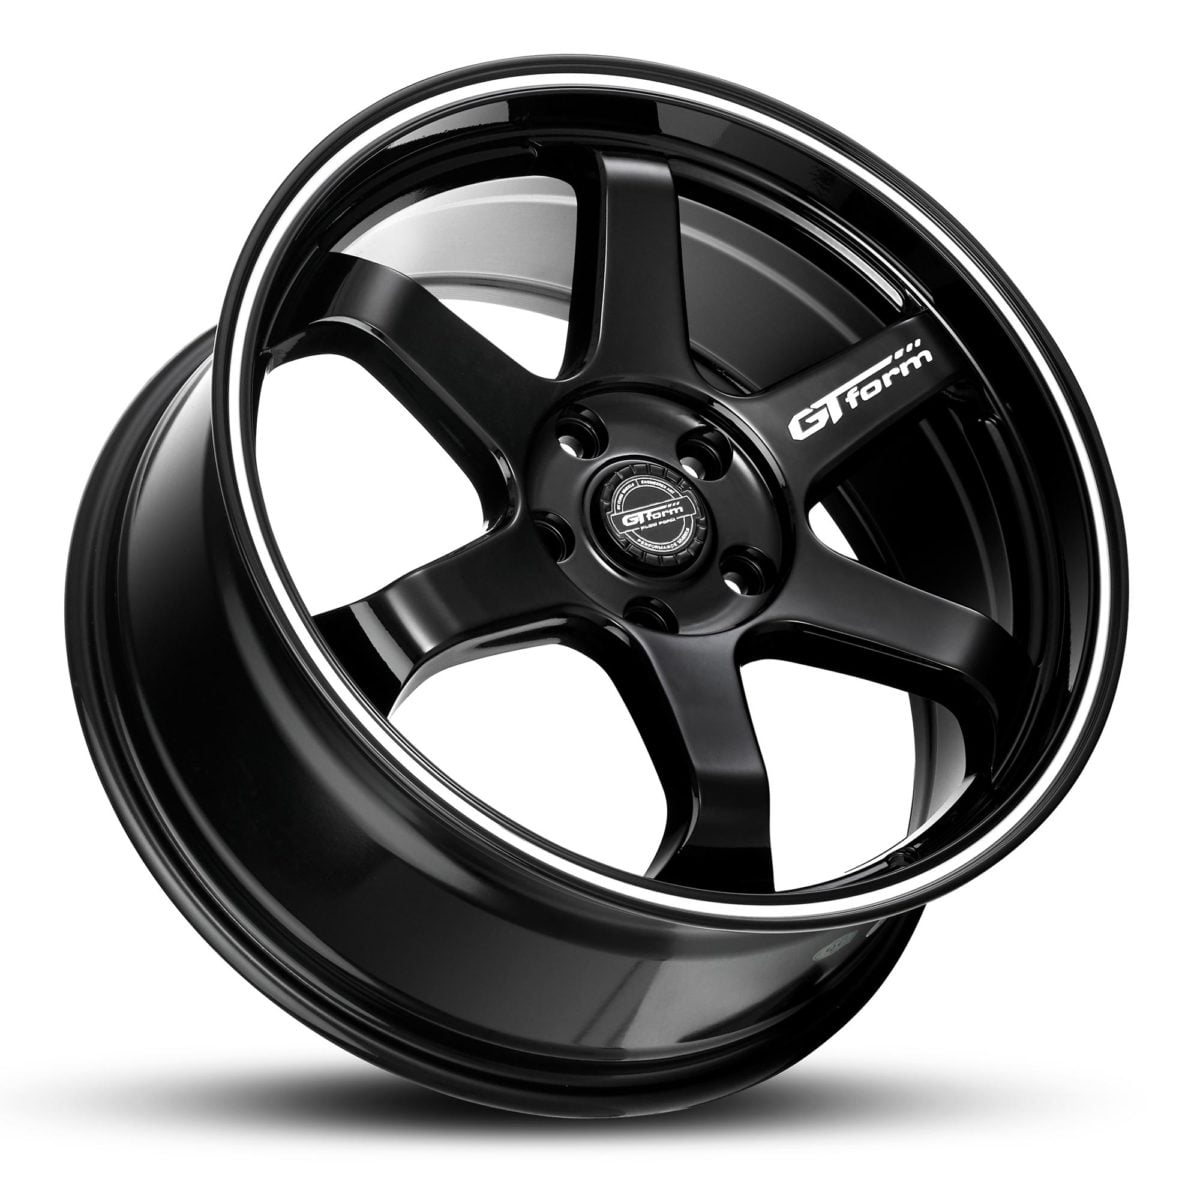 Performance wheels GT Form RPM black machined lip rims